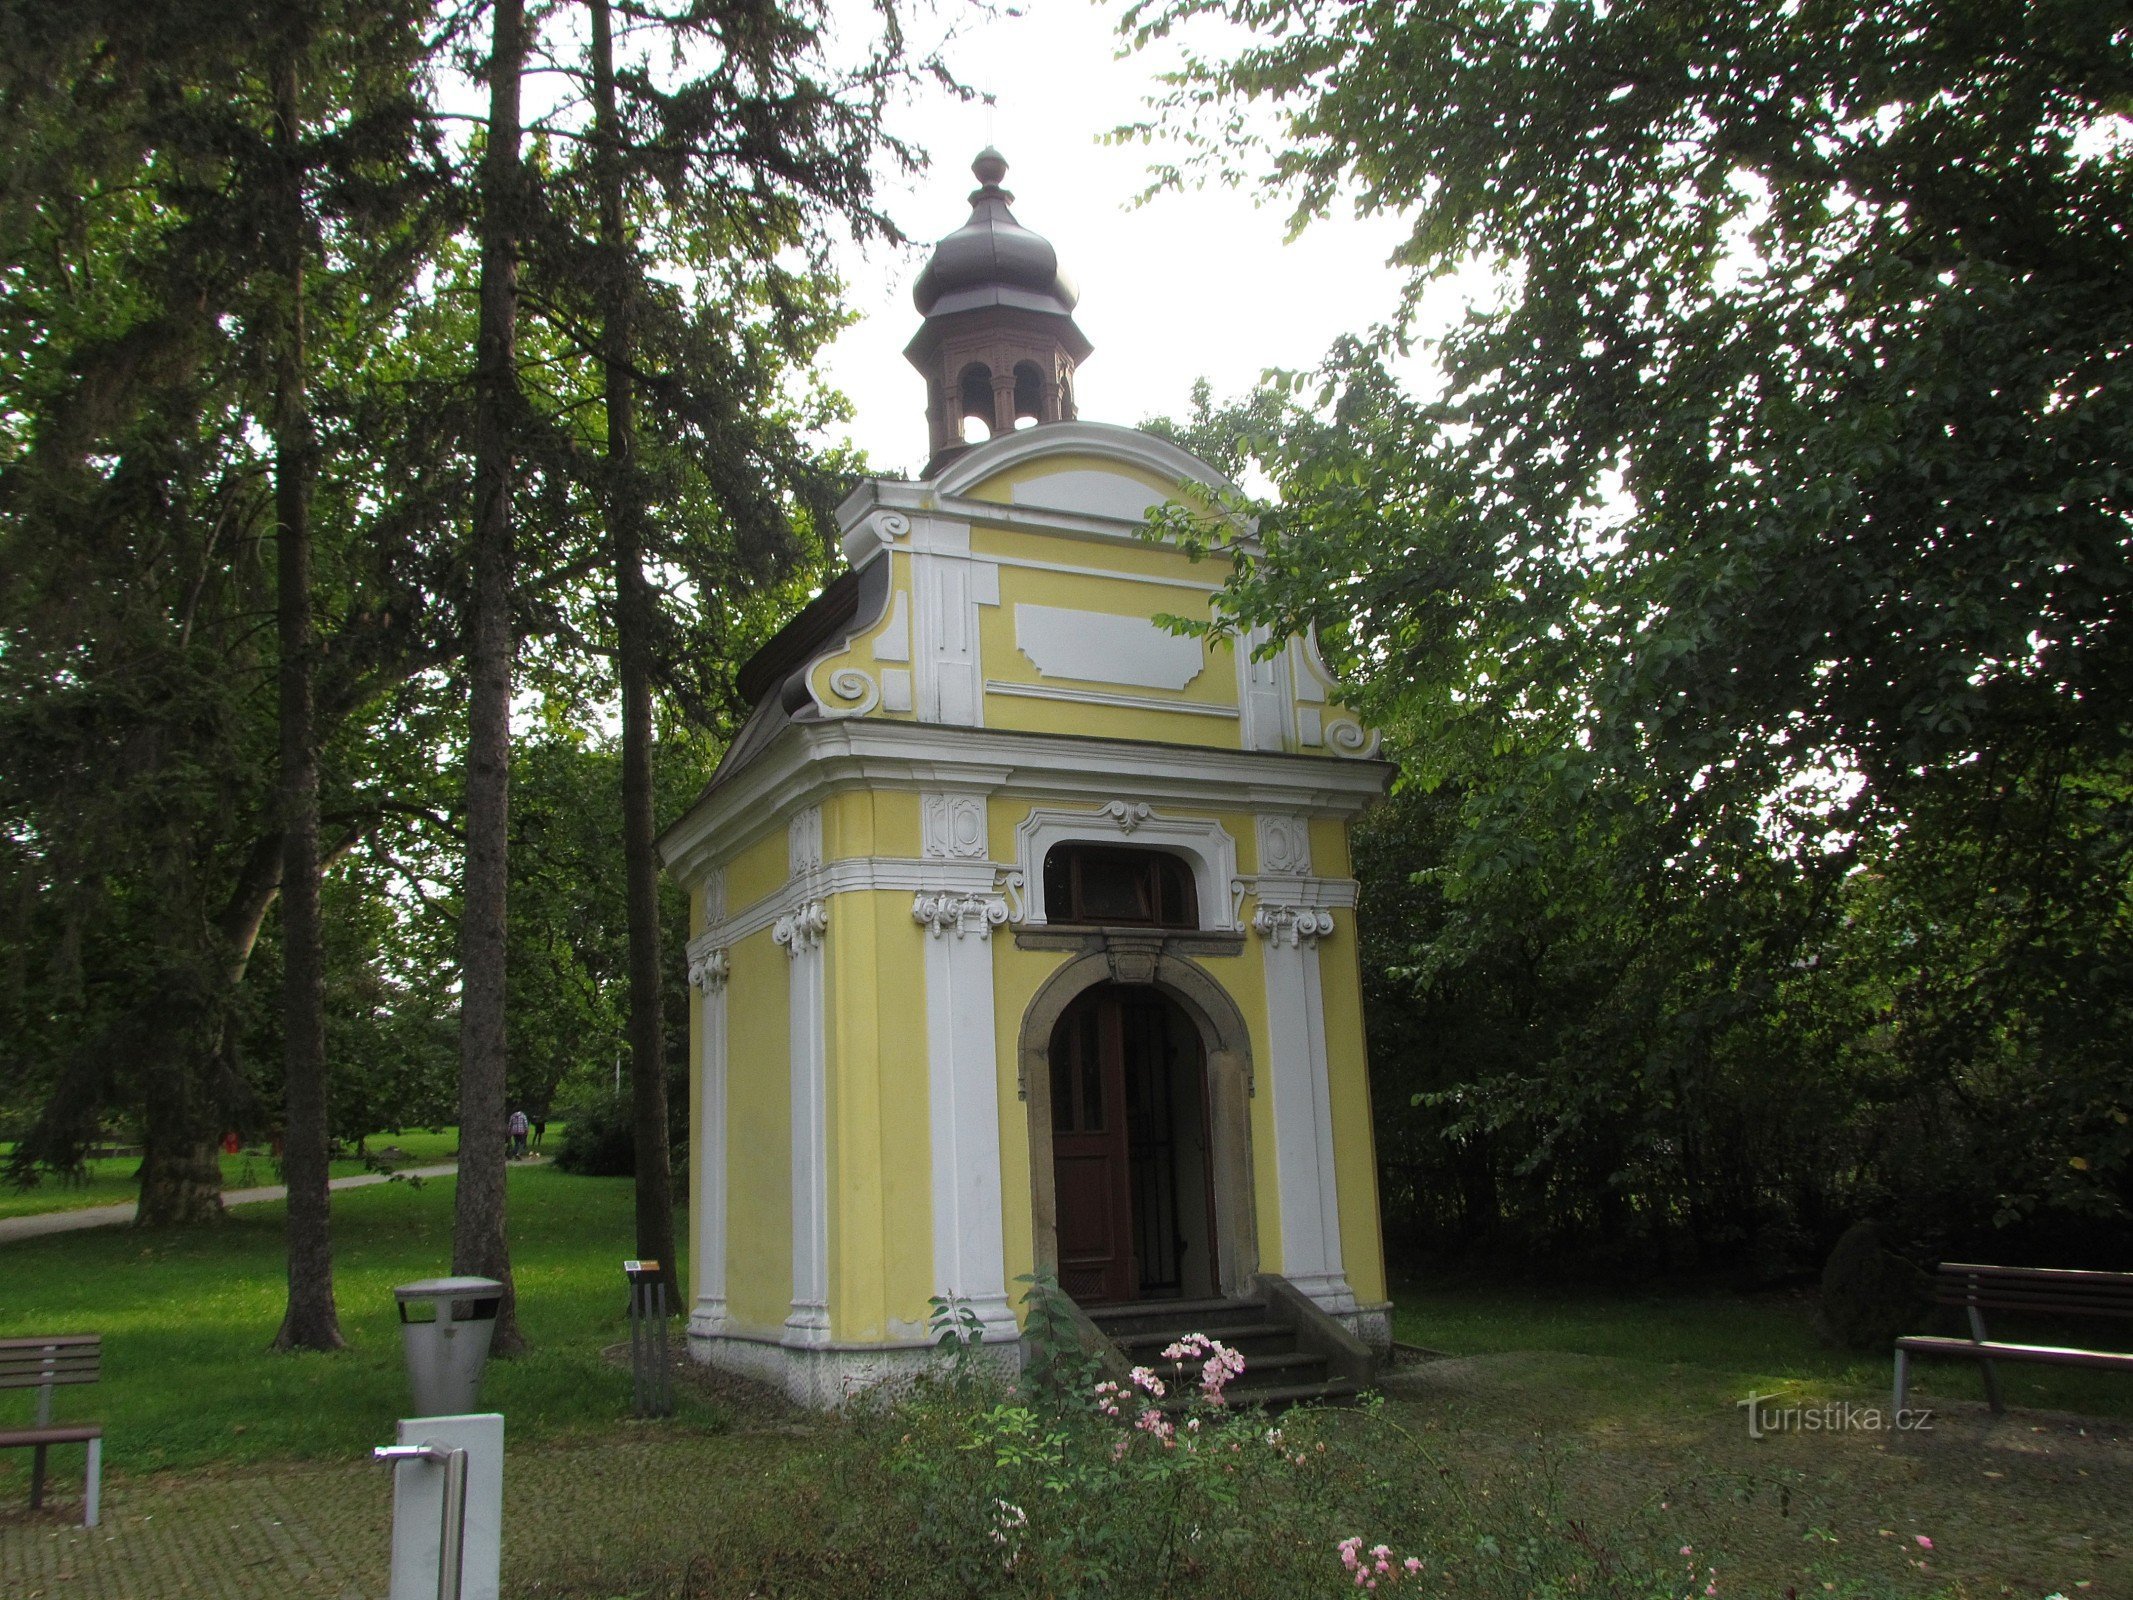 Novojičín Kapel van het Heilige Kruis